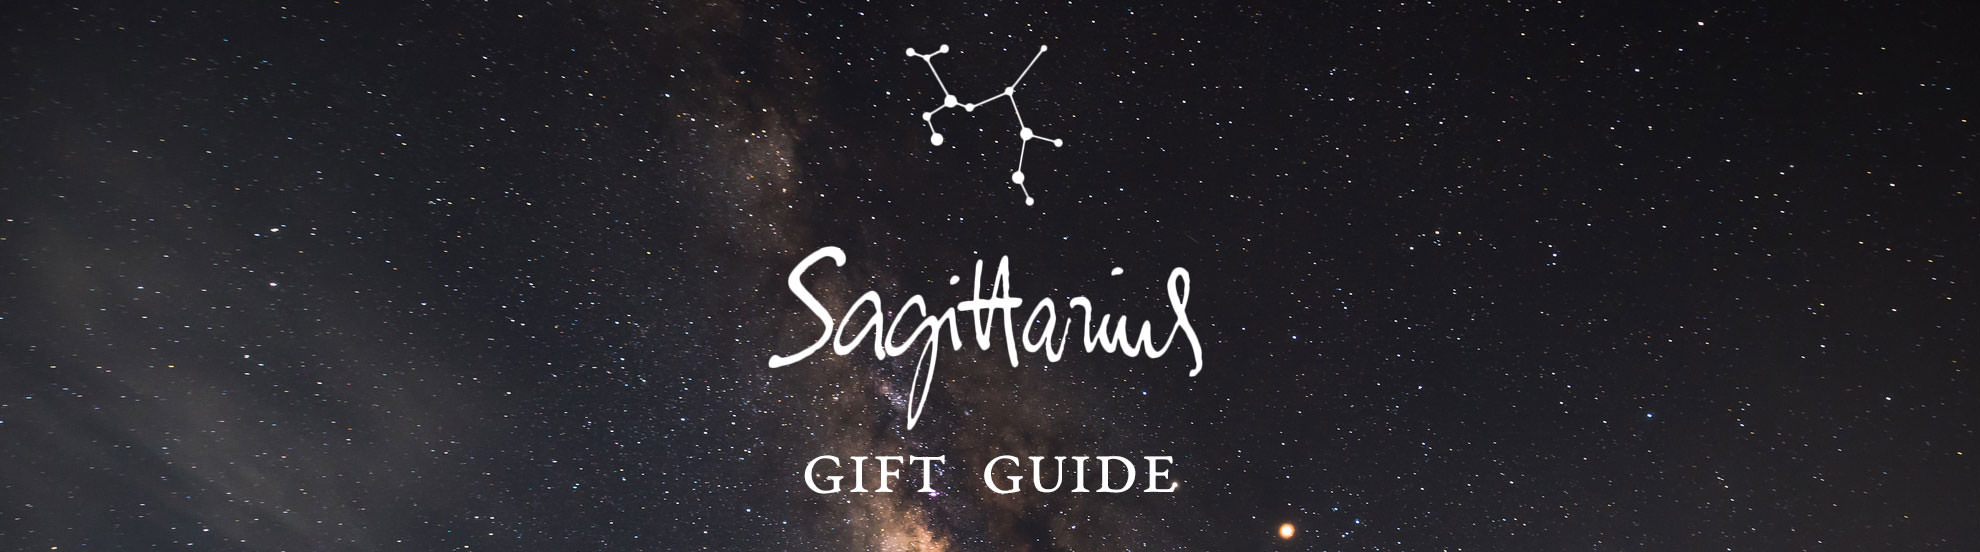 Sagittarius Gift Guide